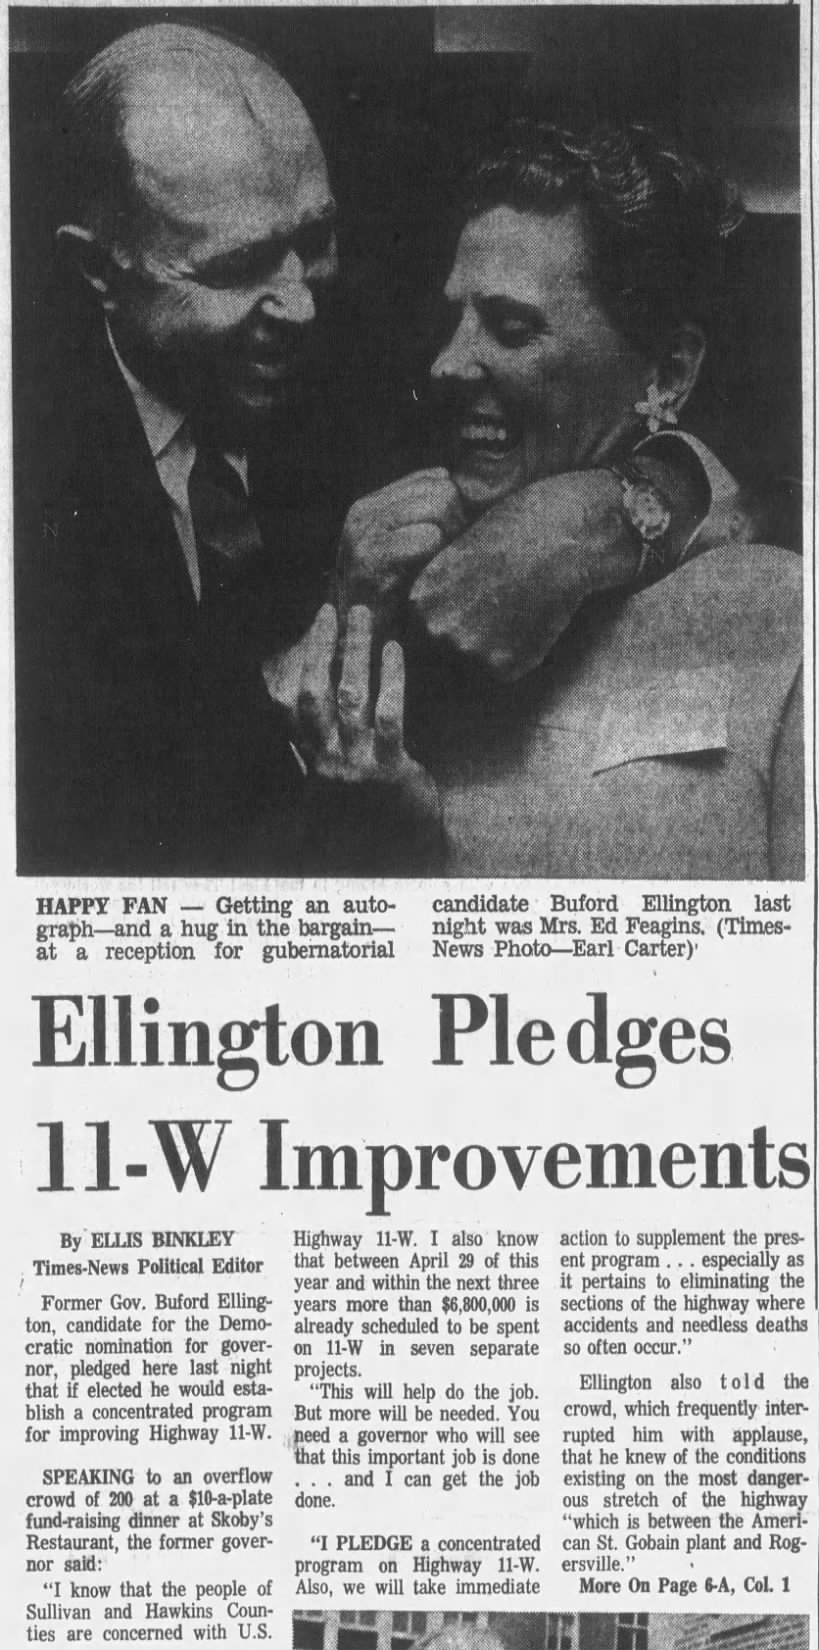 Ellington Pledges 11-W Improvements